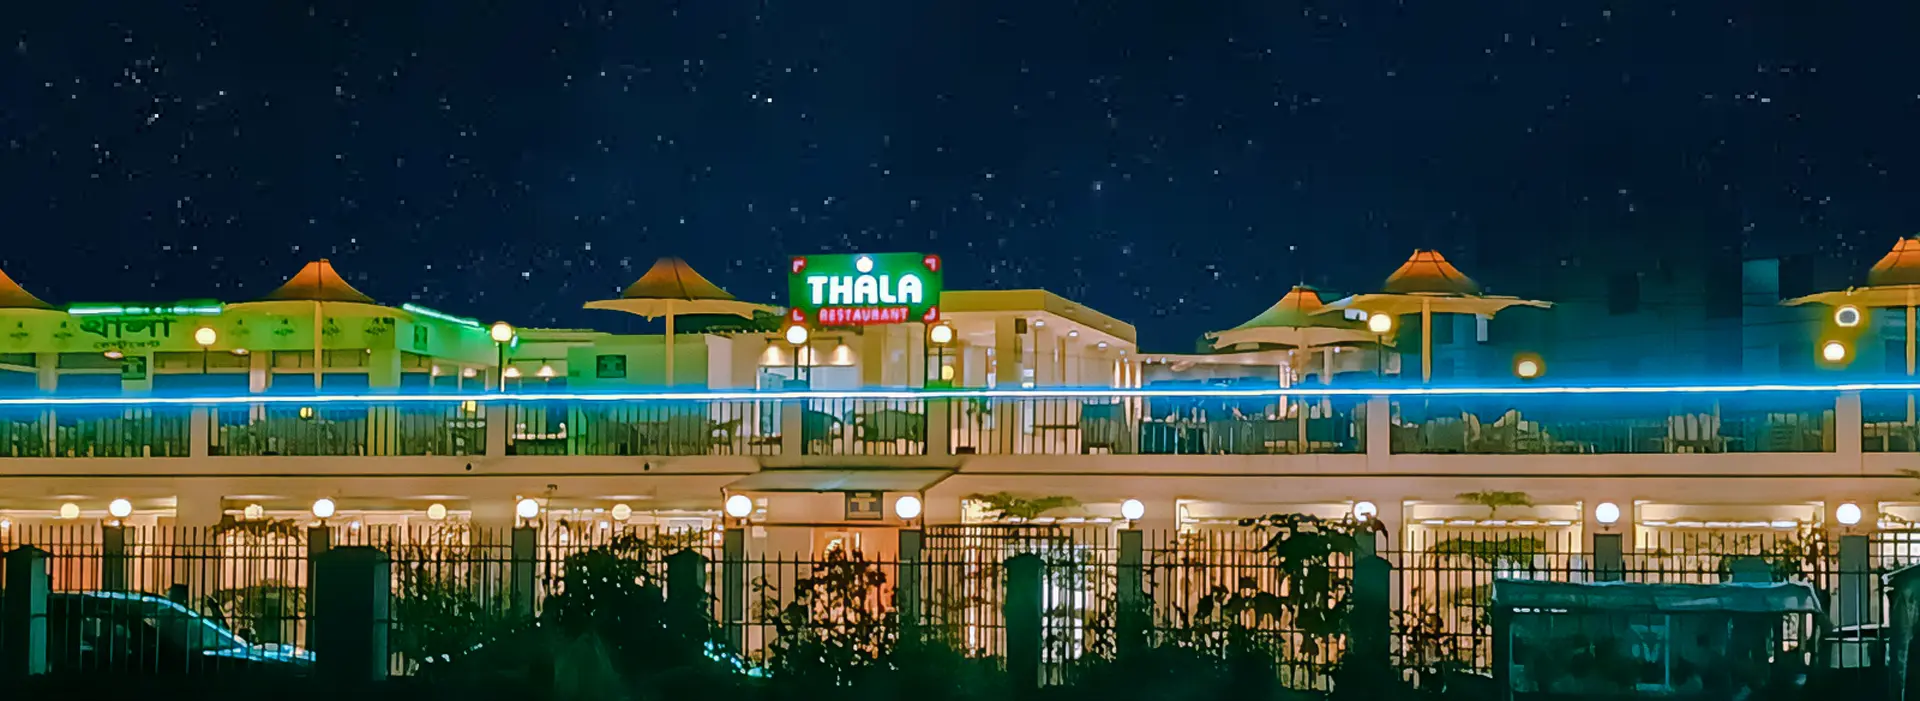 Thala Restaurant Overview